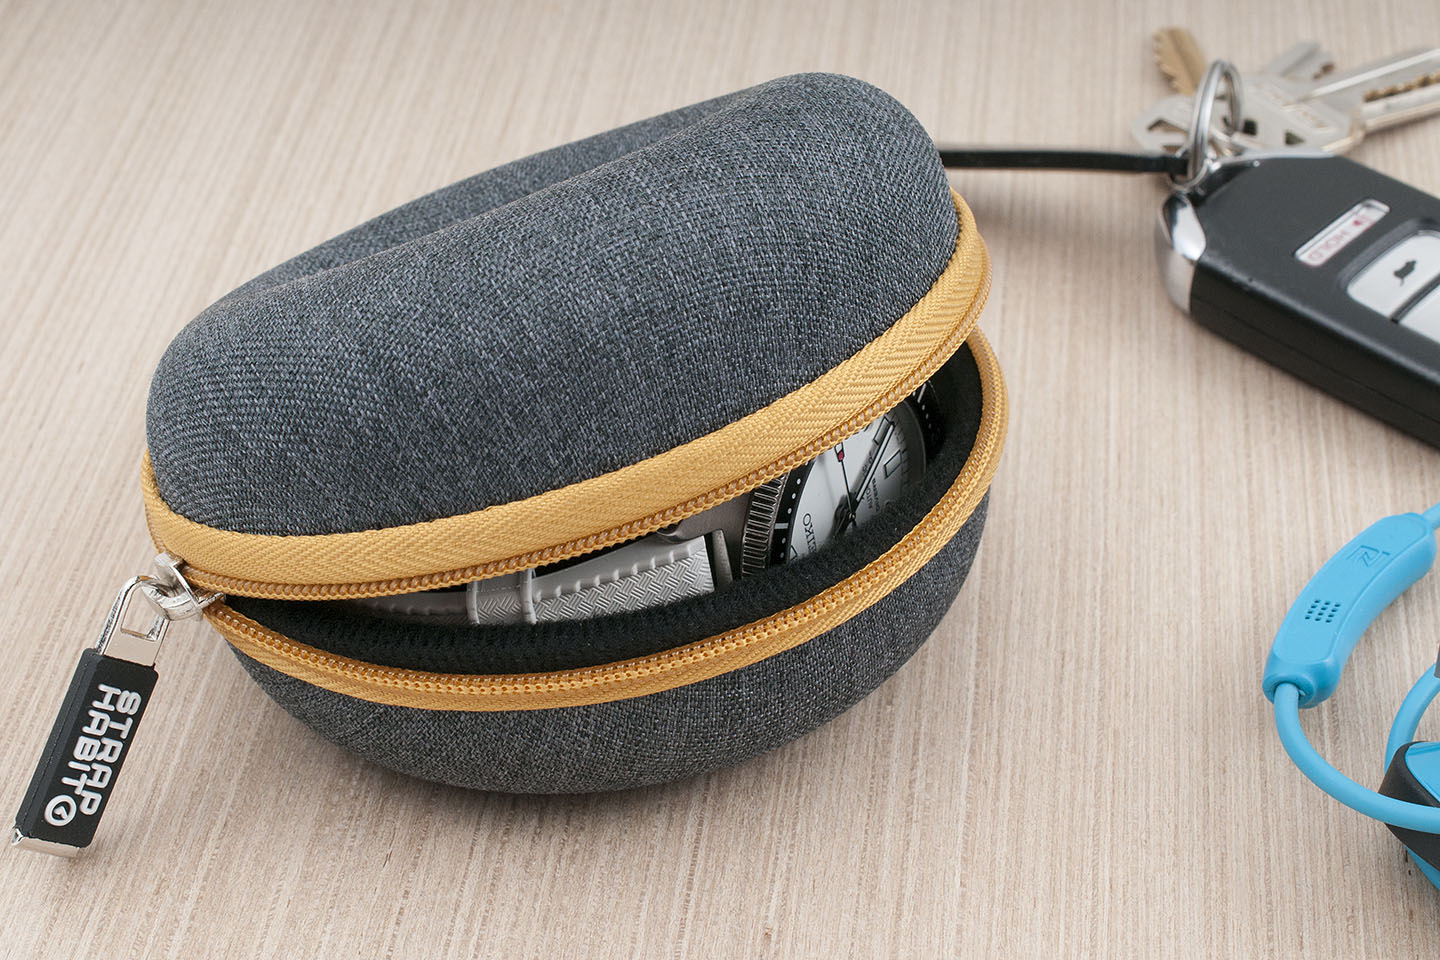 Watch travel case pod zipper gray black yellow gold hard storage protect